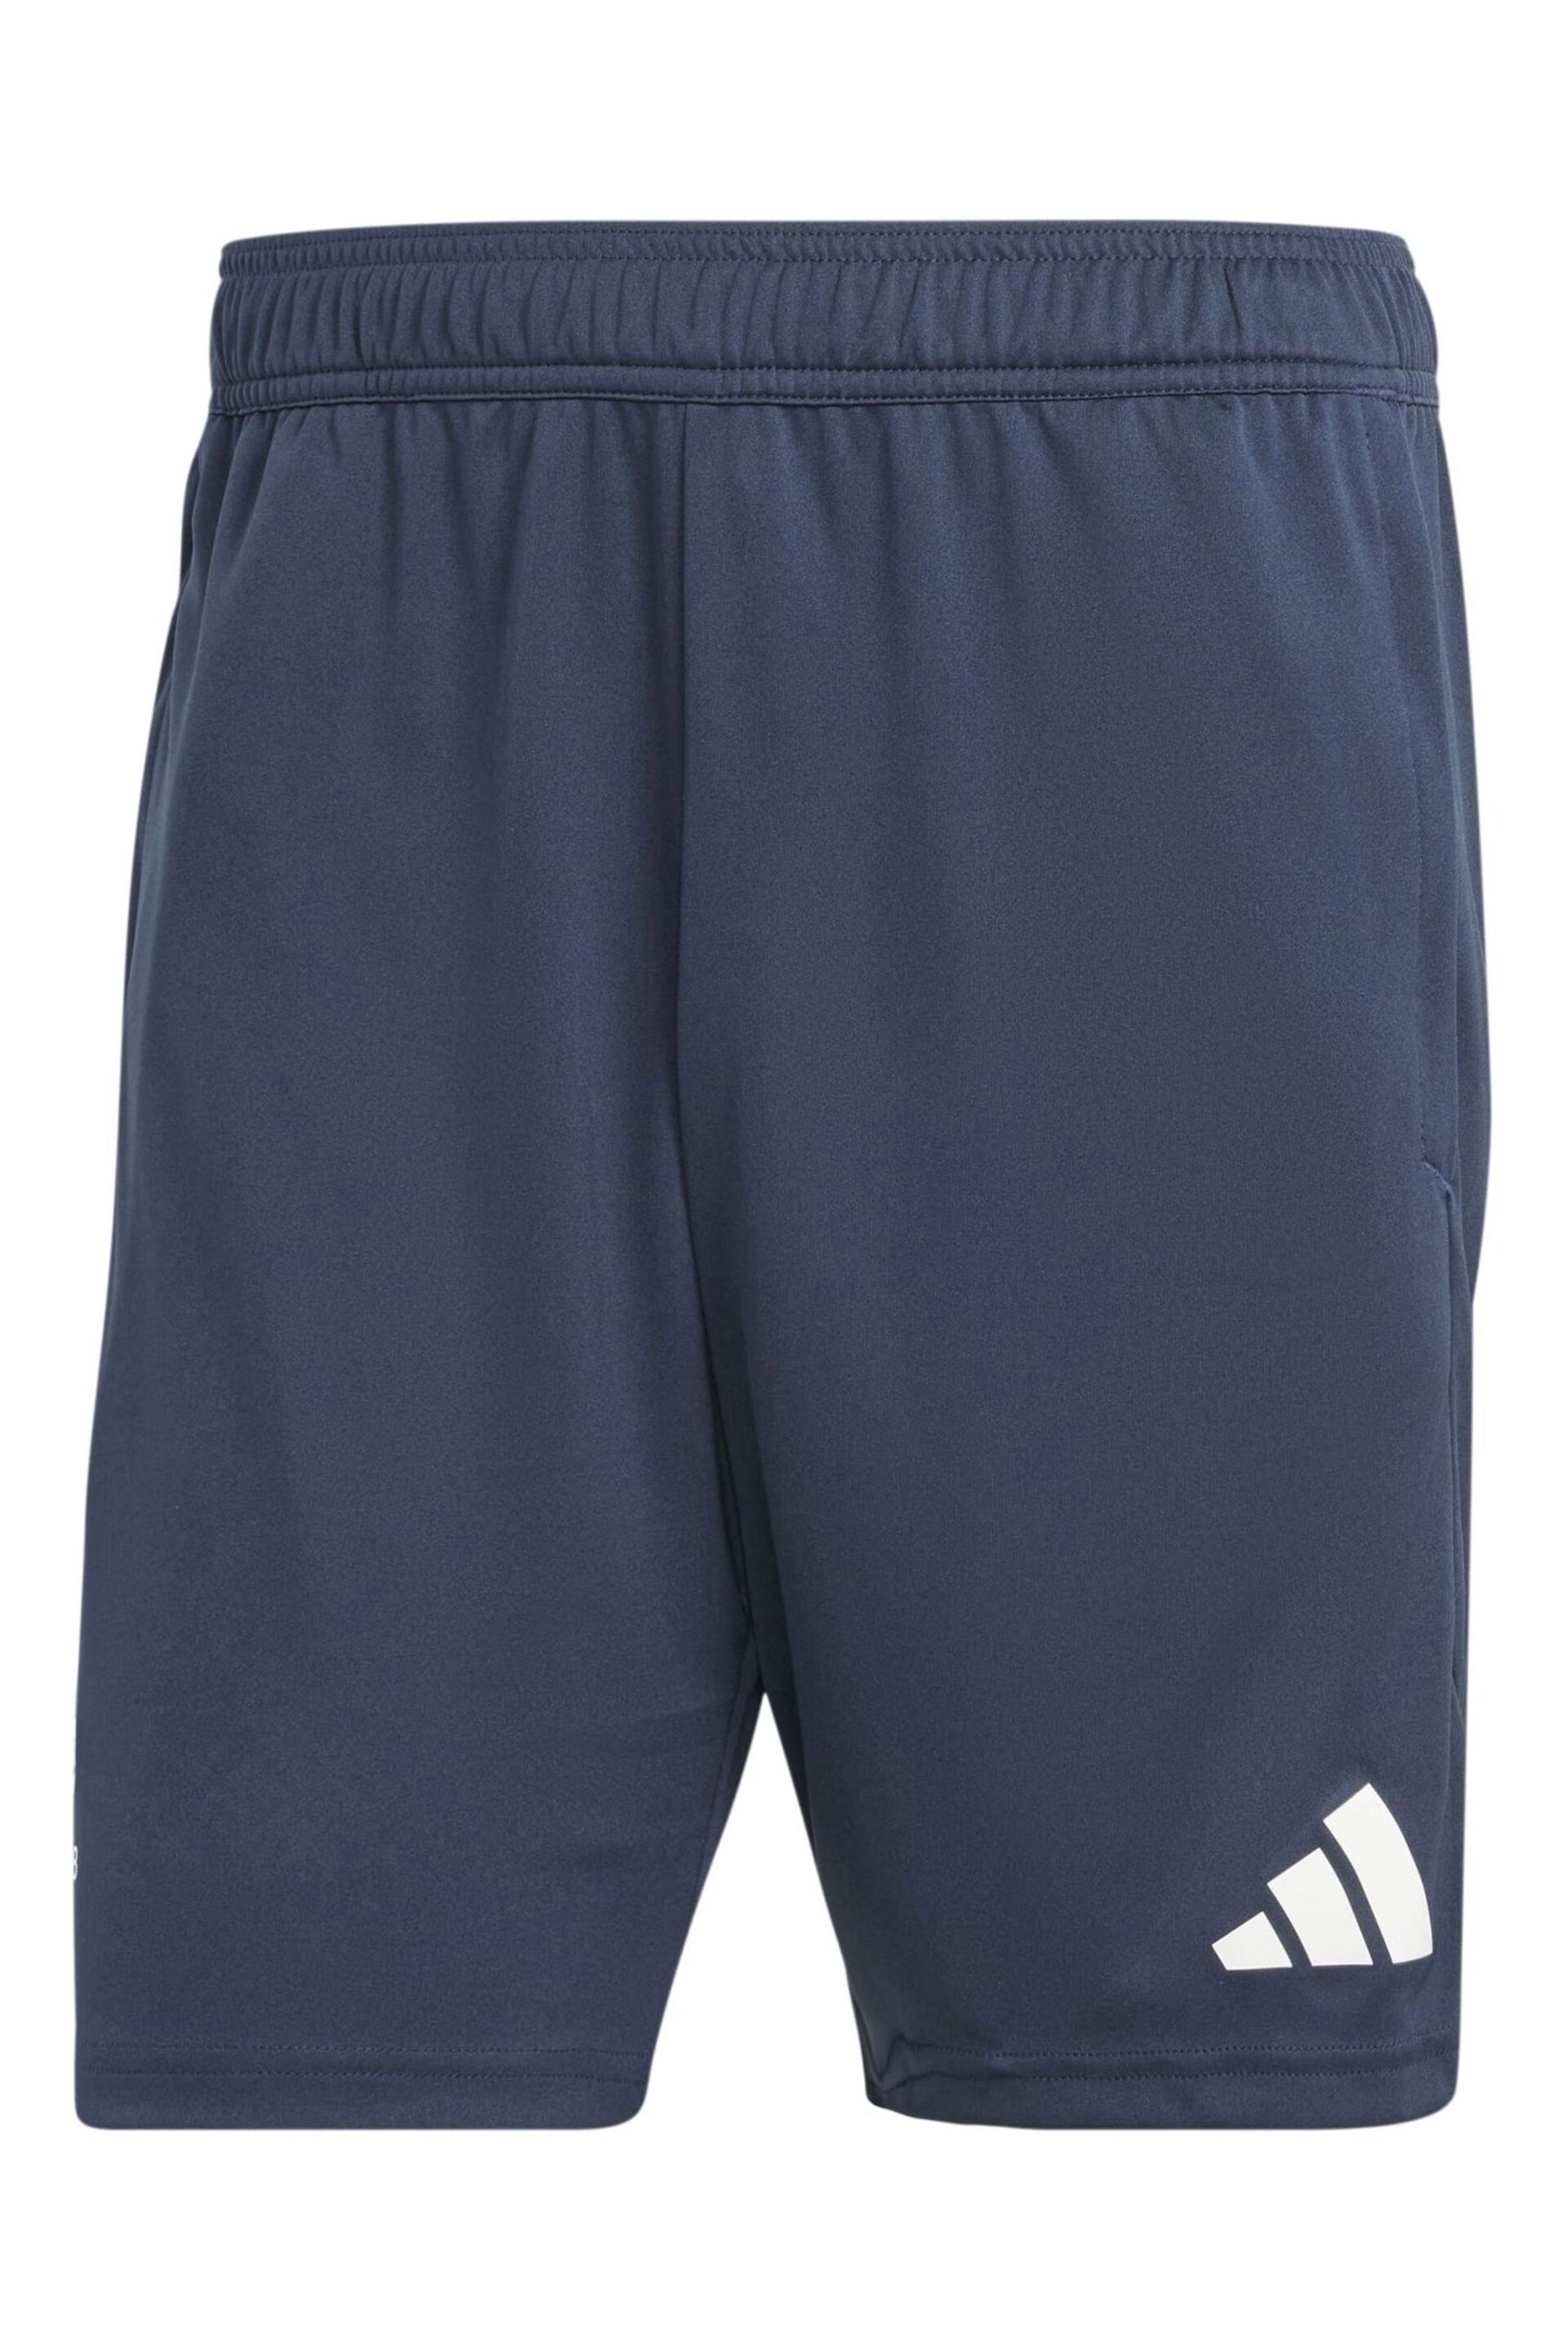 adidas Blue Team GB Training Shorts - Image 3 of 3